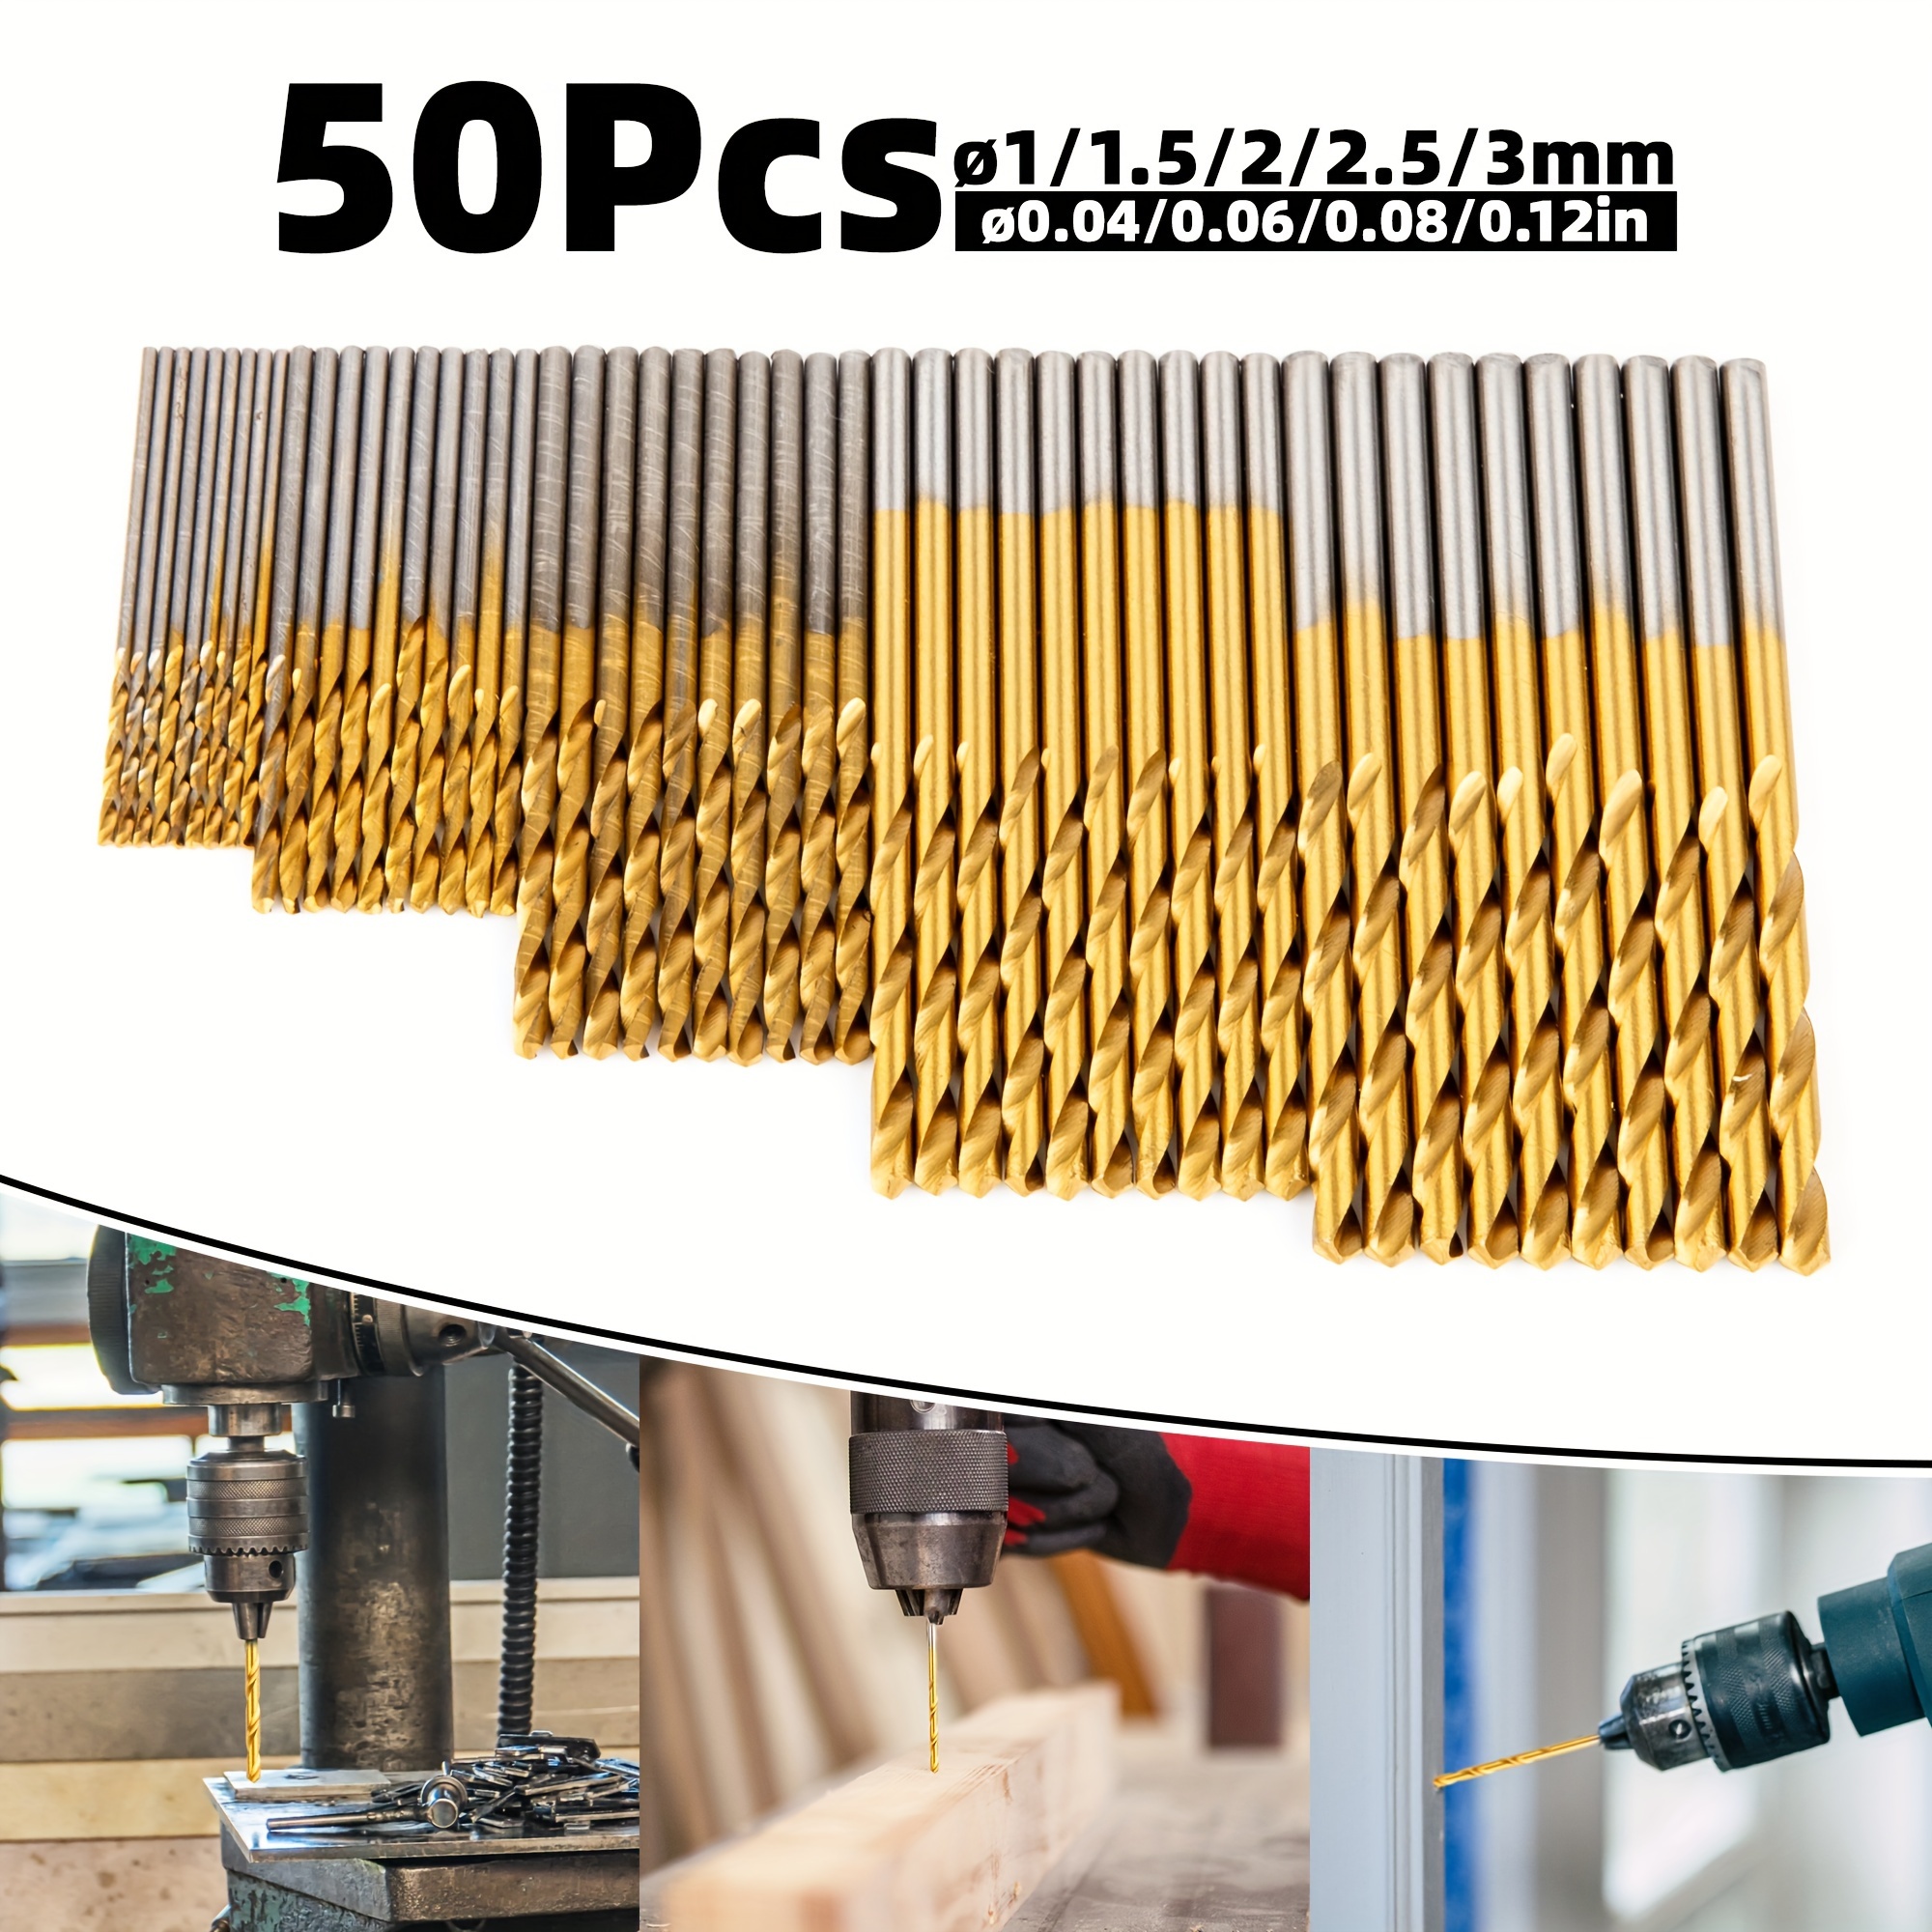 

50pcs Titanium Coated Hss High Speed Steel Drill Bits Set - Premium Quality Power Tools - 1/1.5/2/2.5/3mm (0.04/0.06/0.08/0.12in)